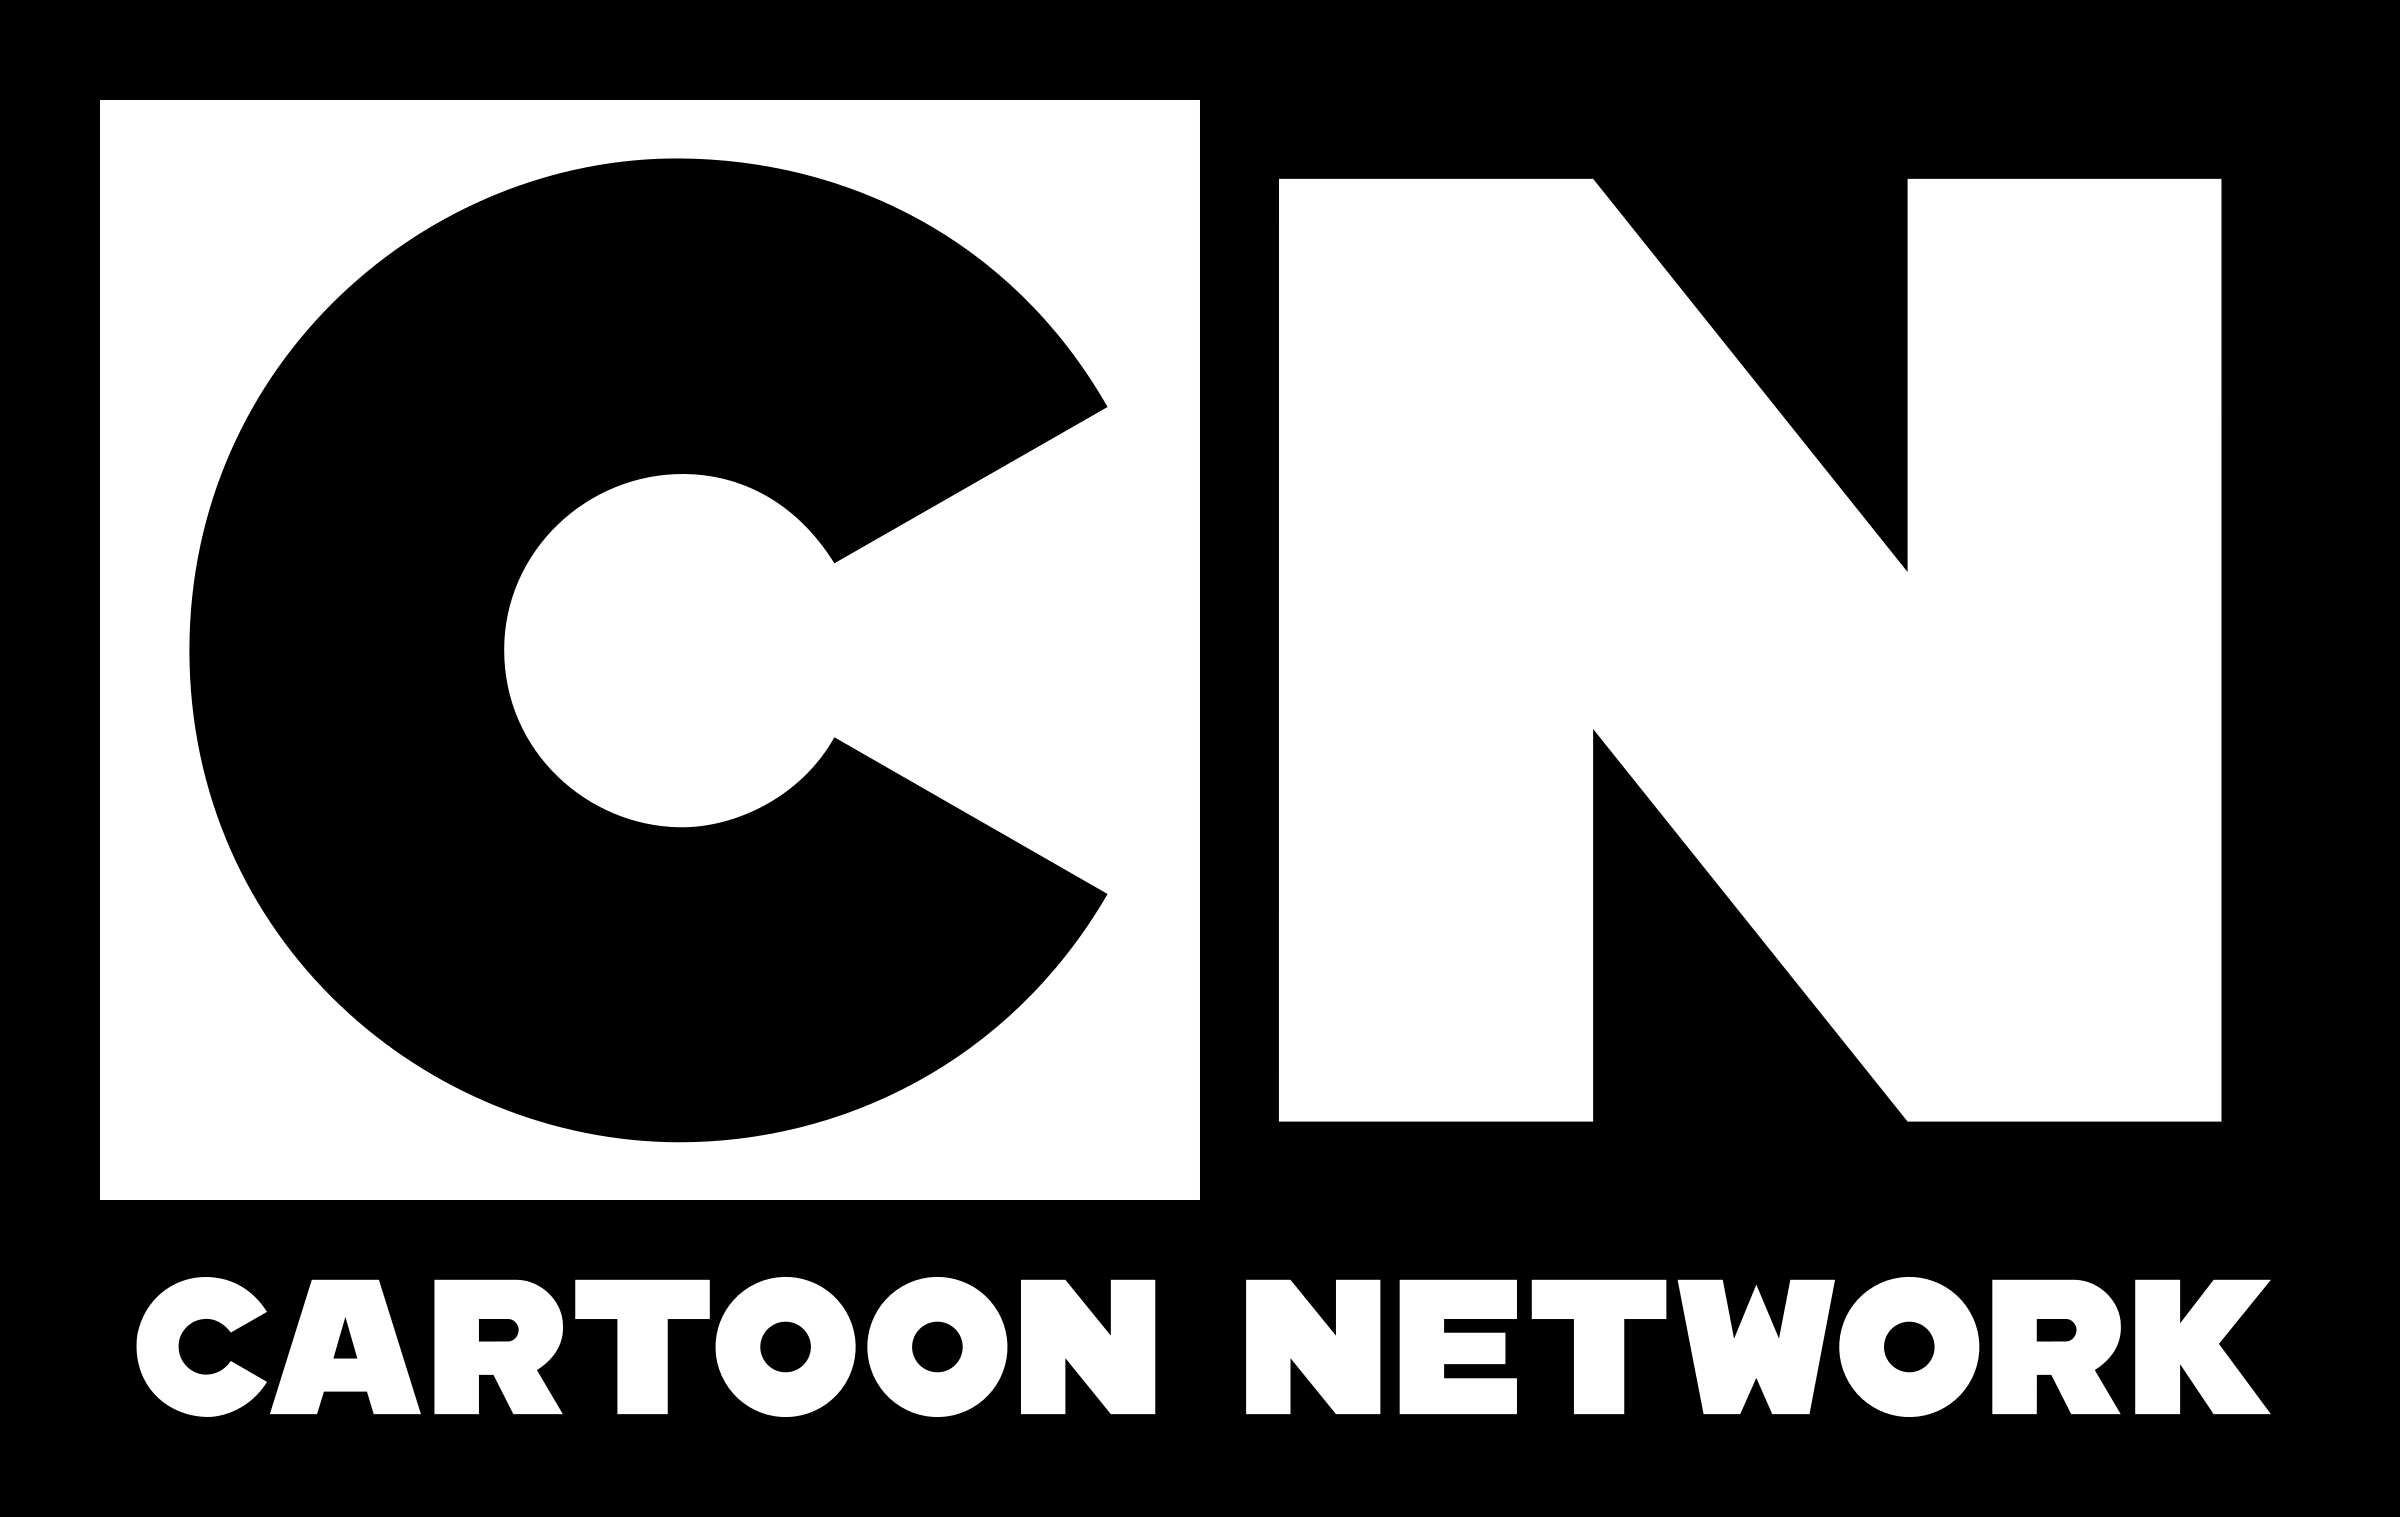 Cartoon Network Logo - Cartoon Network Logo PNG Transparent & SVG Vector - Freebie Supply